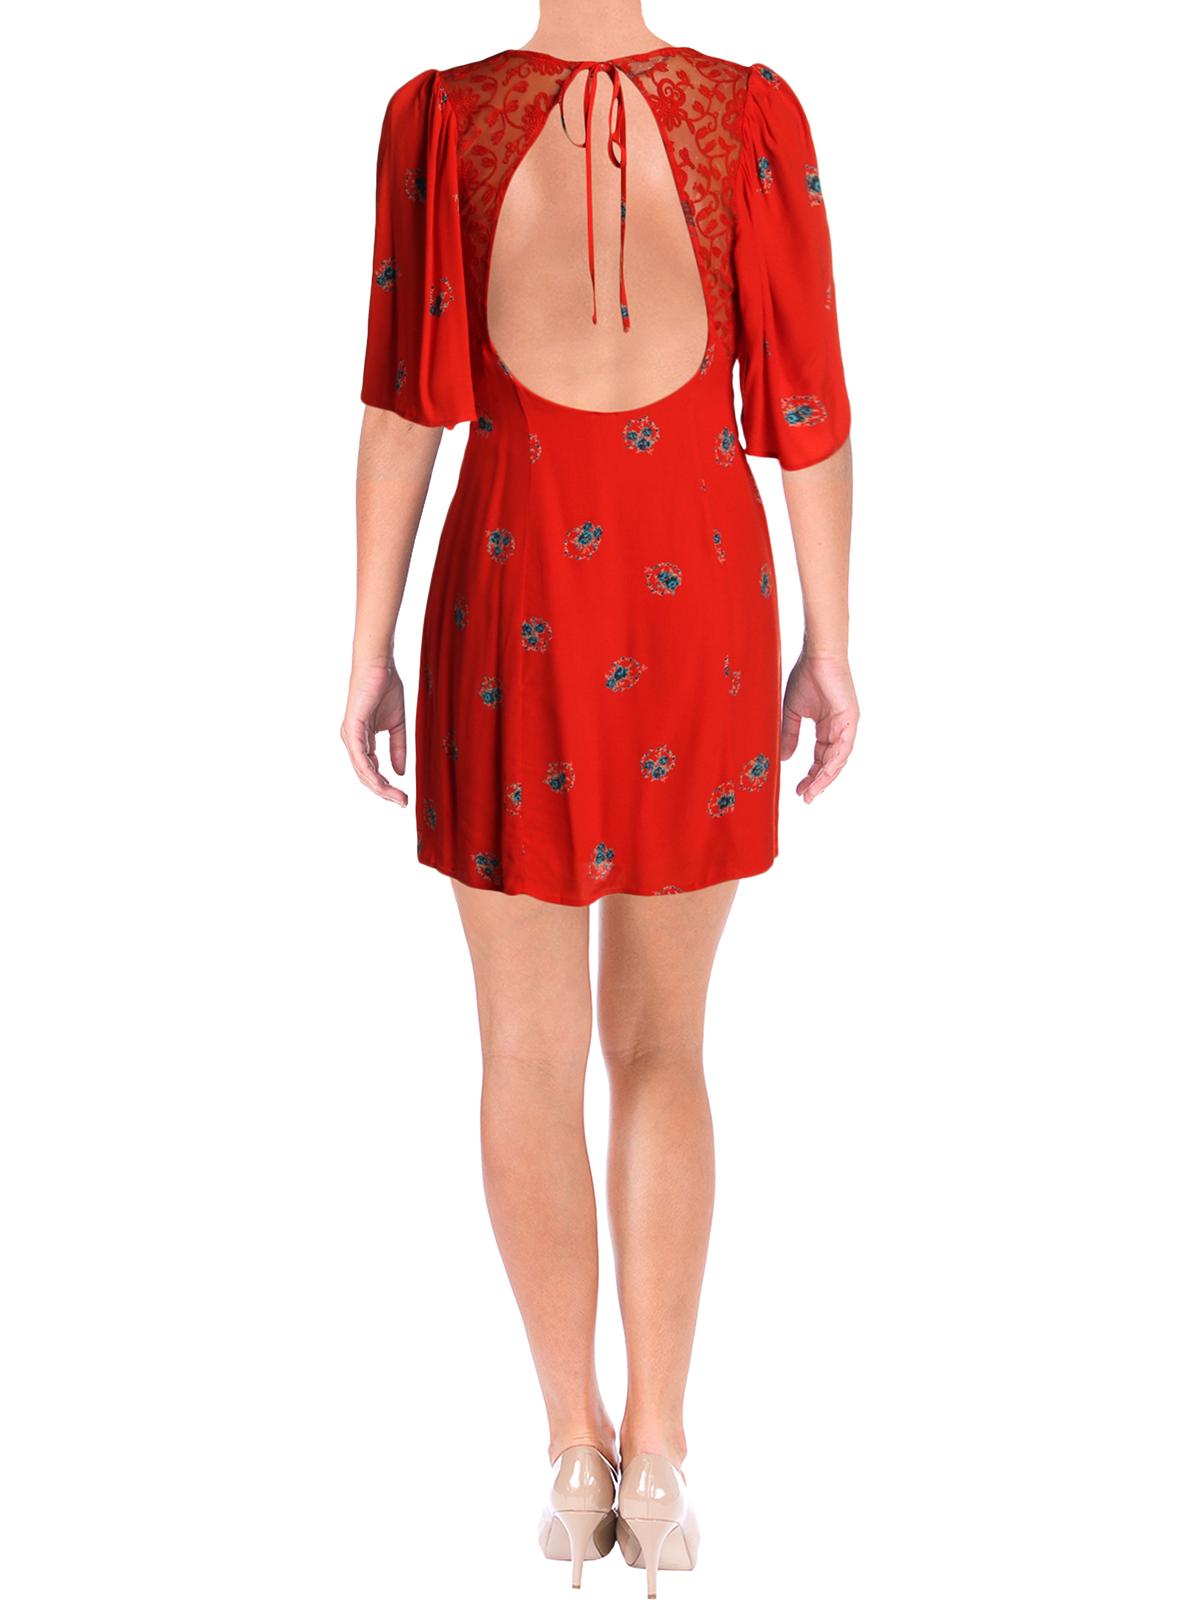 Free People Womens Mockingbird Mesh Inset Mini Dress, Red, 8 - image 2 of 2